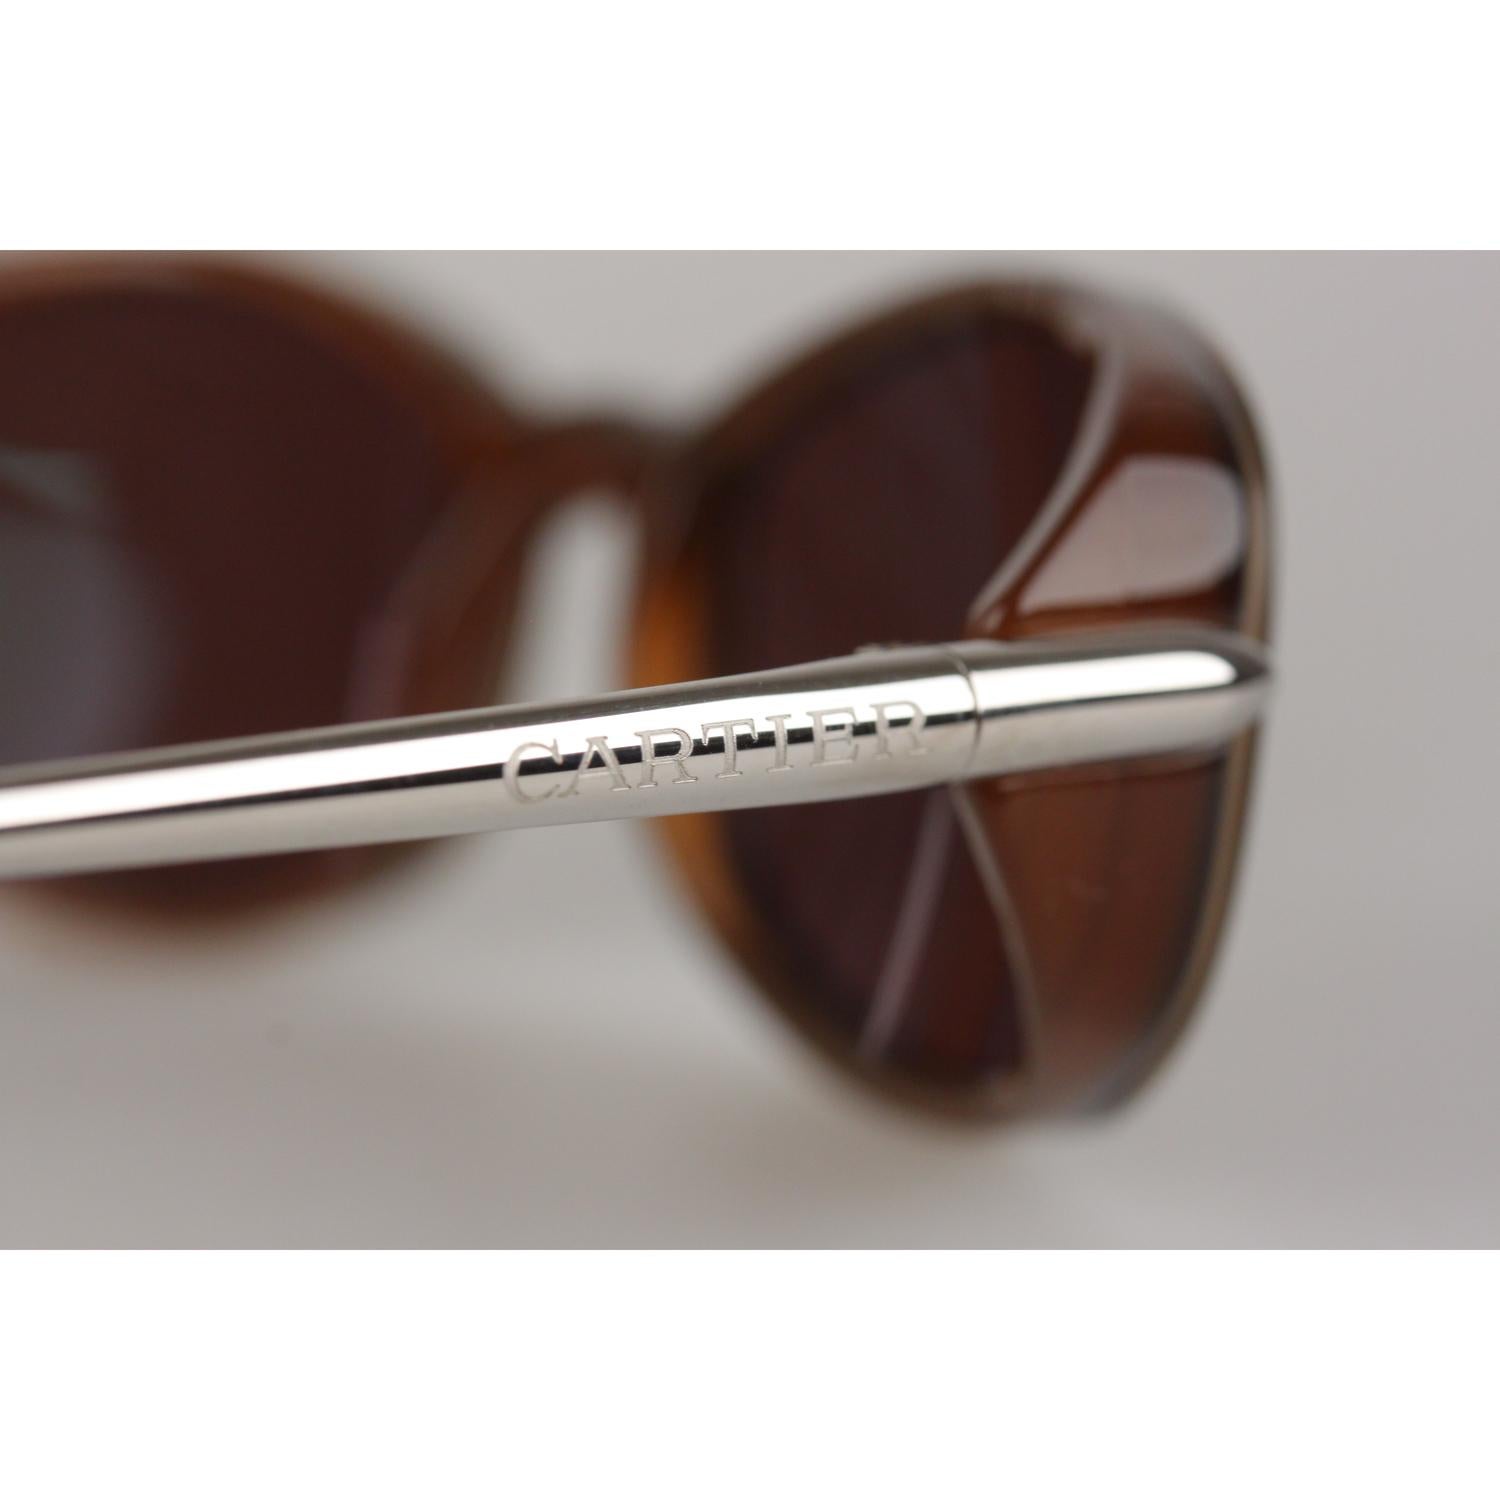 Cartier Paris Brown Unisex Sunglasses Mod T8200423 51mm New Old Stock 2